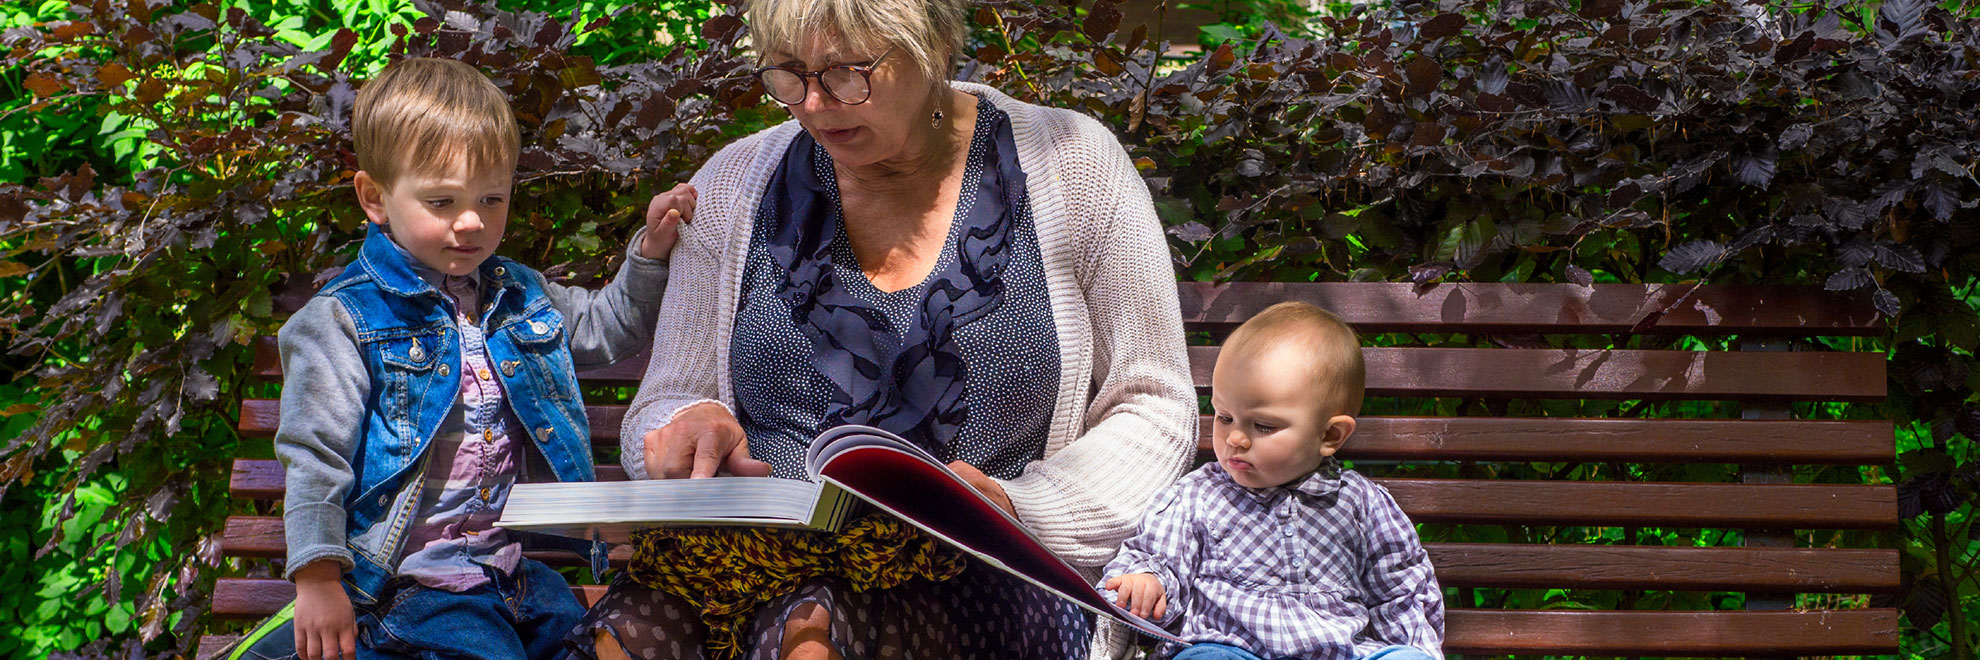 grandmother reading book